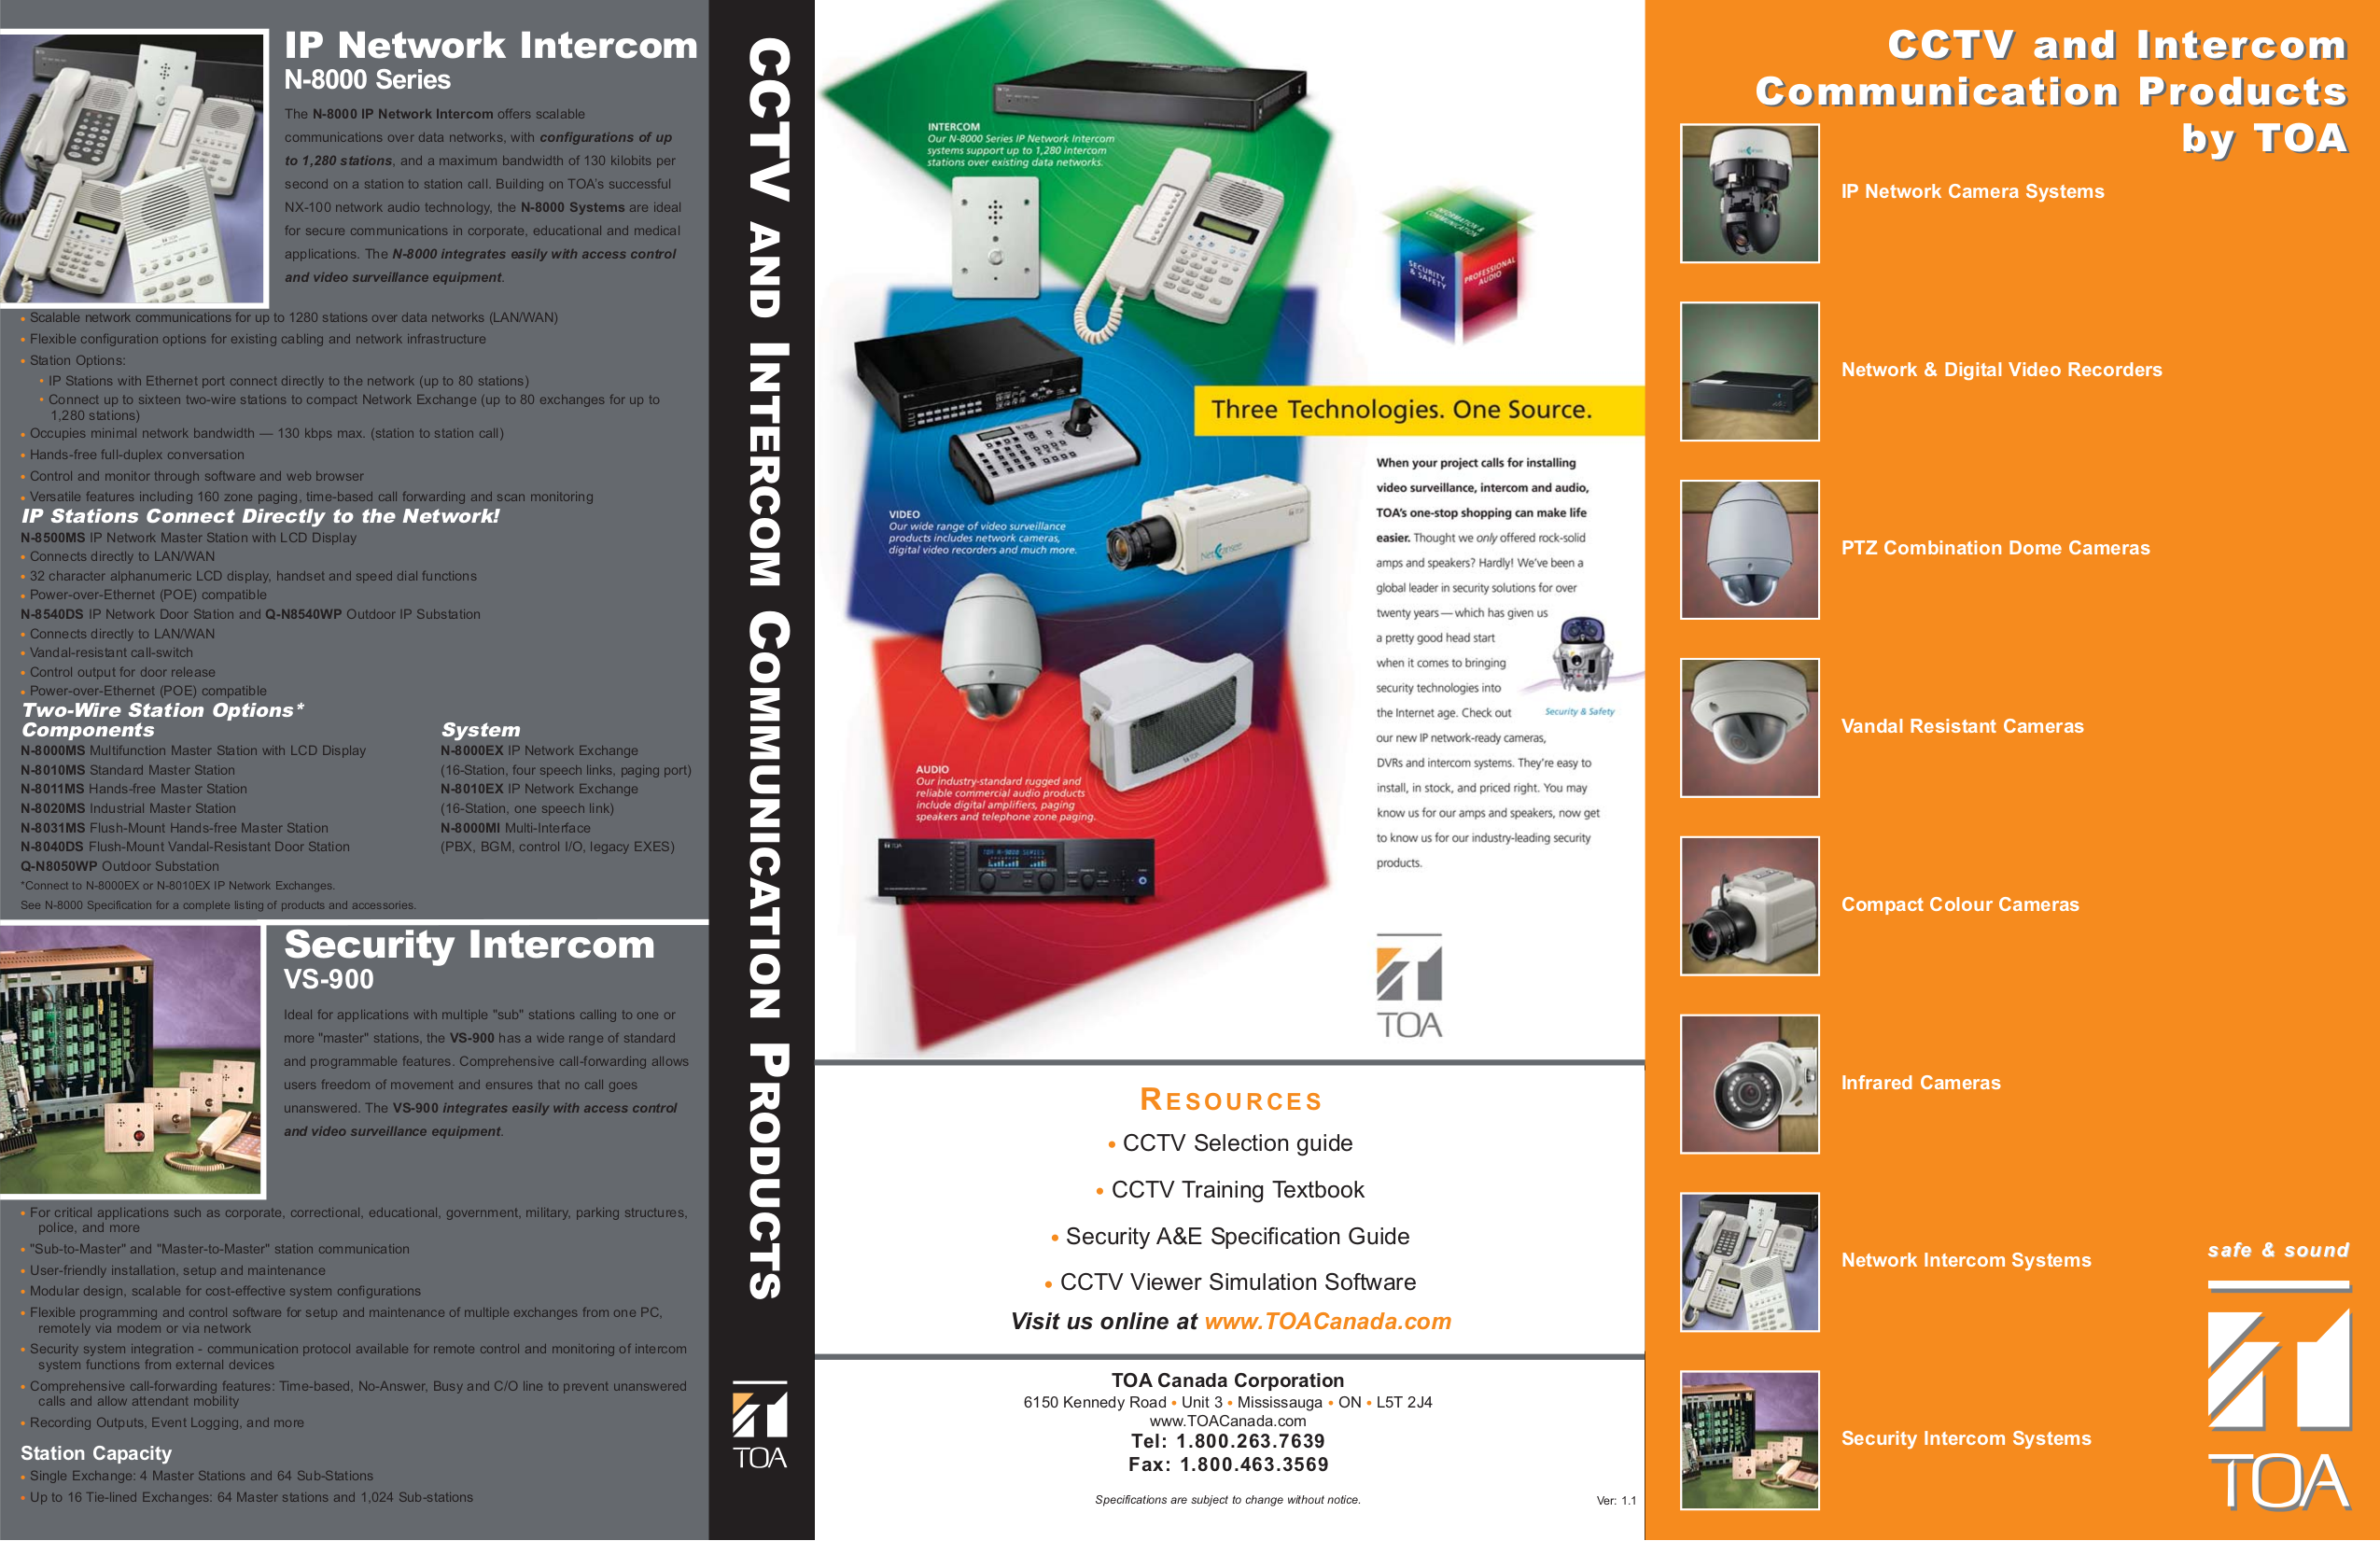 pdf for Toa Security Camera C-CV14-CS manual